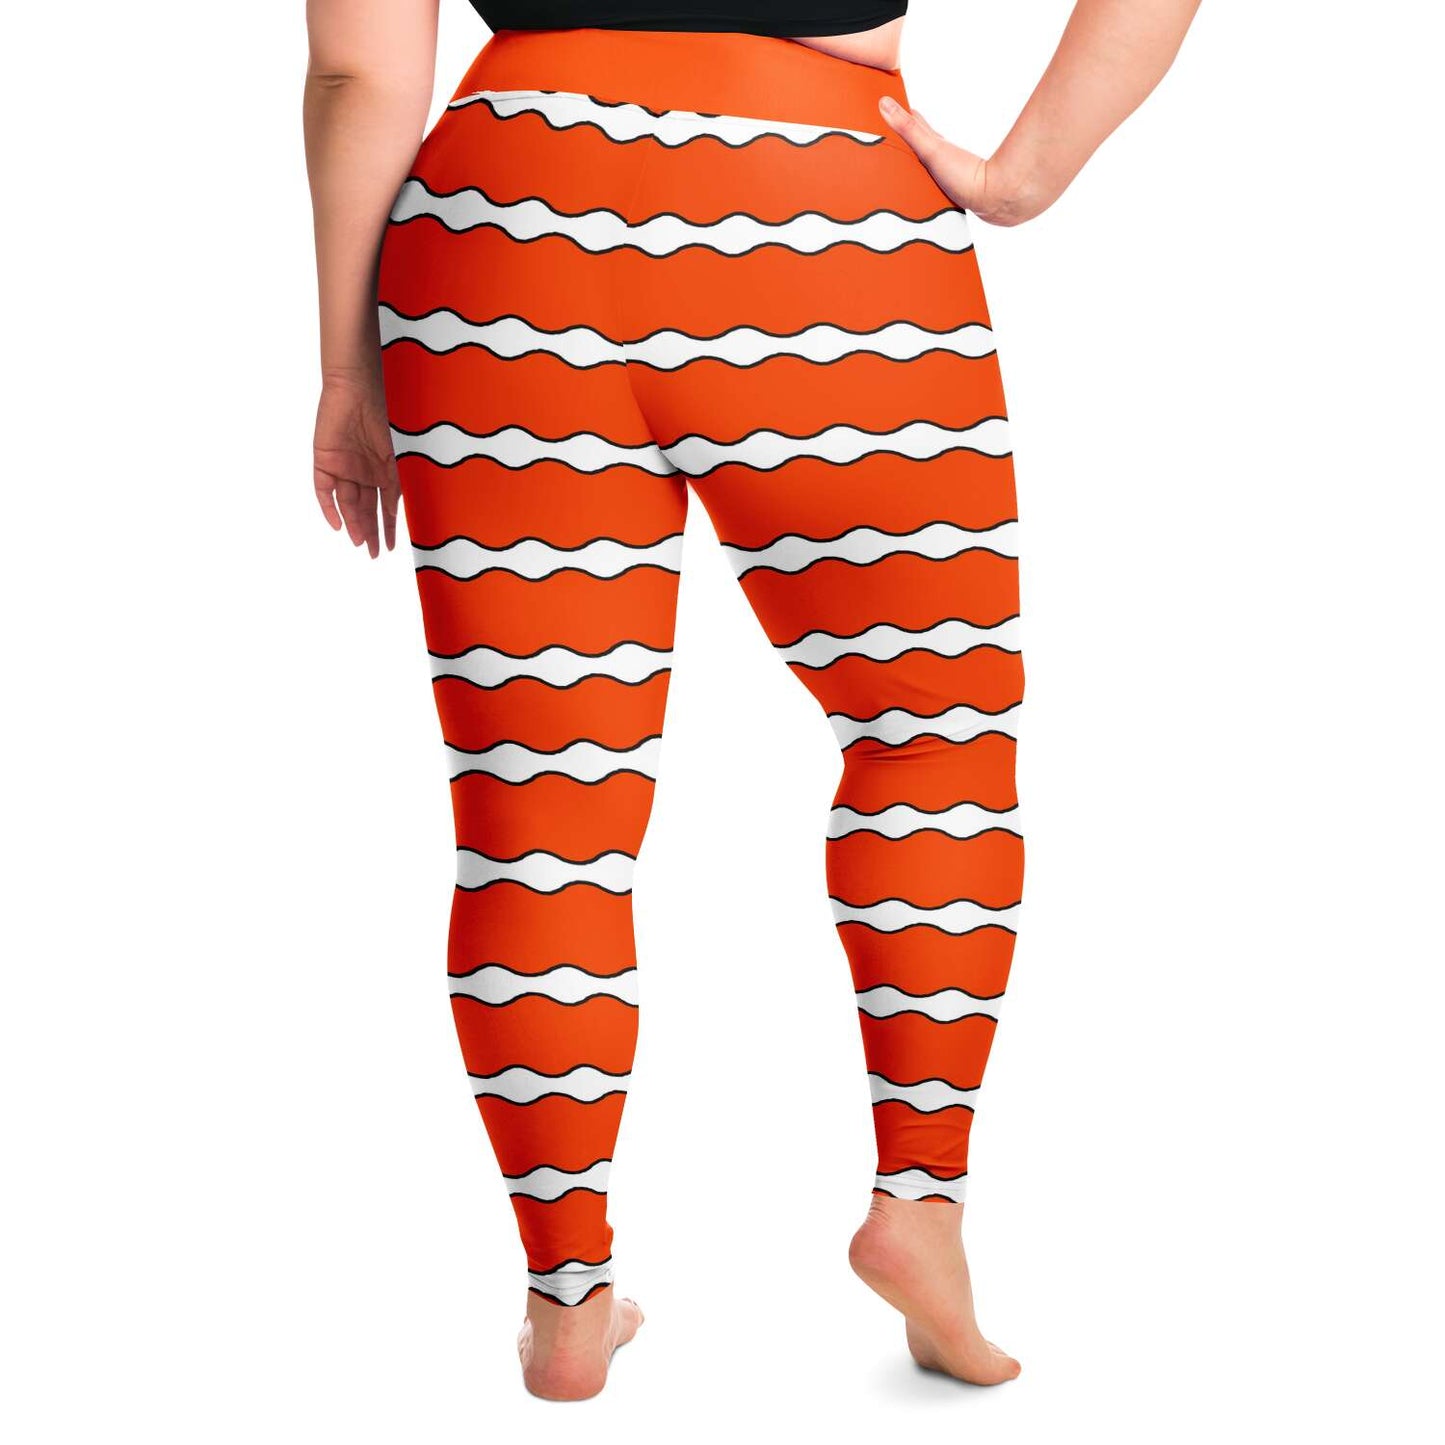 Clownfish leggings / skins - plus size - back view on model